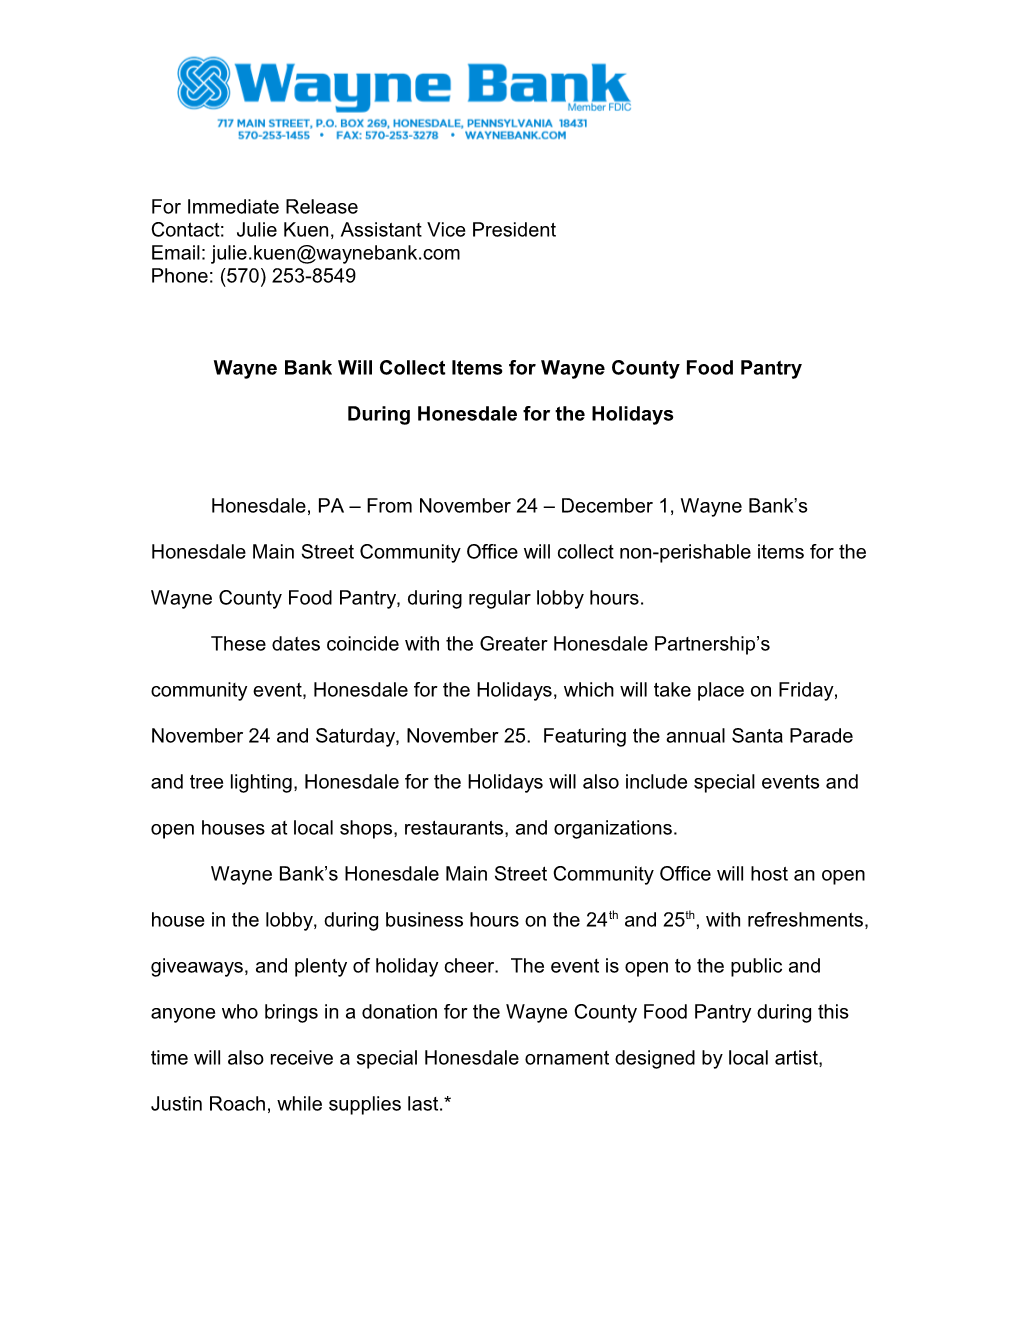 Wayne Bank Will Collect Items for Wayne County Food Pantry